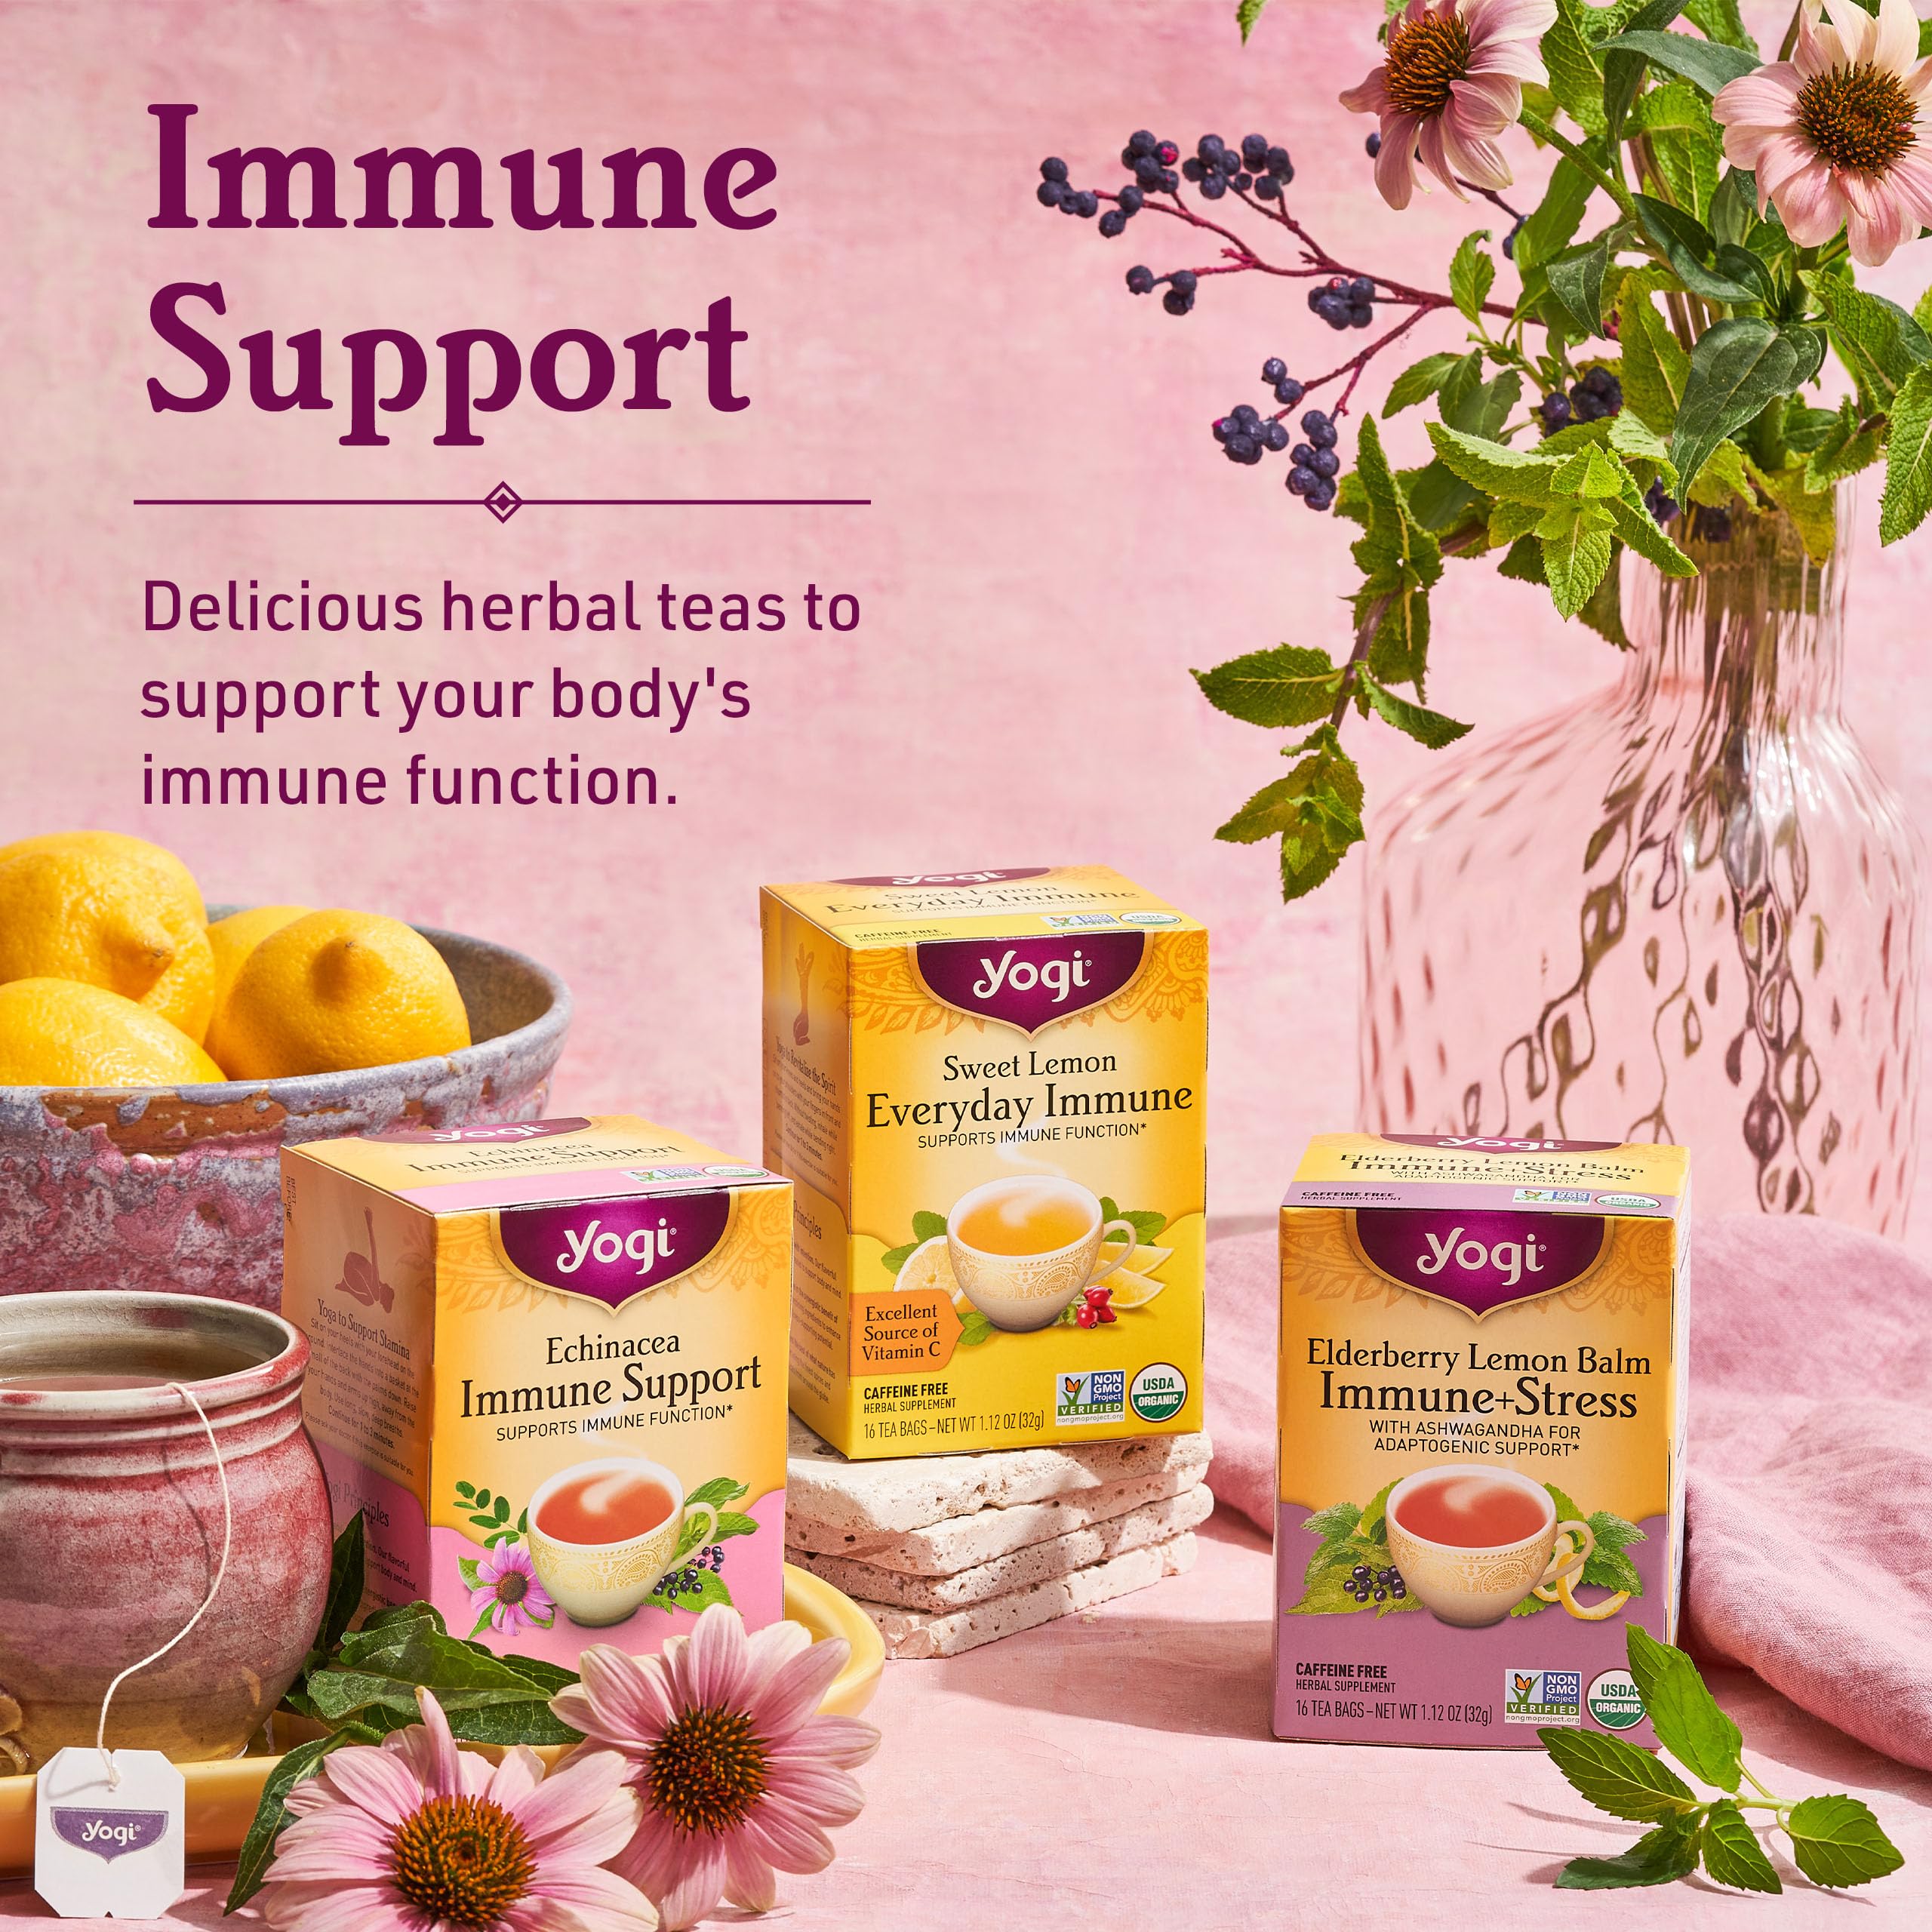 Yogi Tea Sweet Lemon Everyday Immune Tea - 16 Tea Bags per Pack (4 Packs) - Daily Immune Support Tea - Delicious Lemon Tea Bags - Includes Tulsi, Lemongrass, Rose Hip, Lemon Peel & More